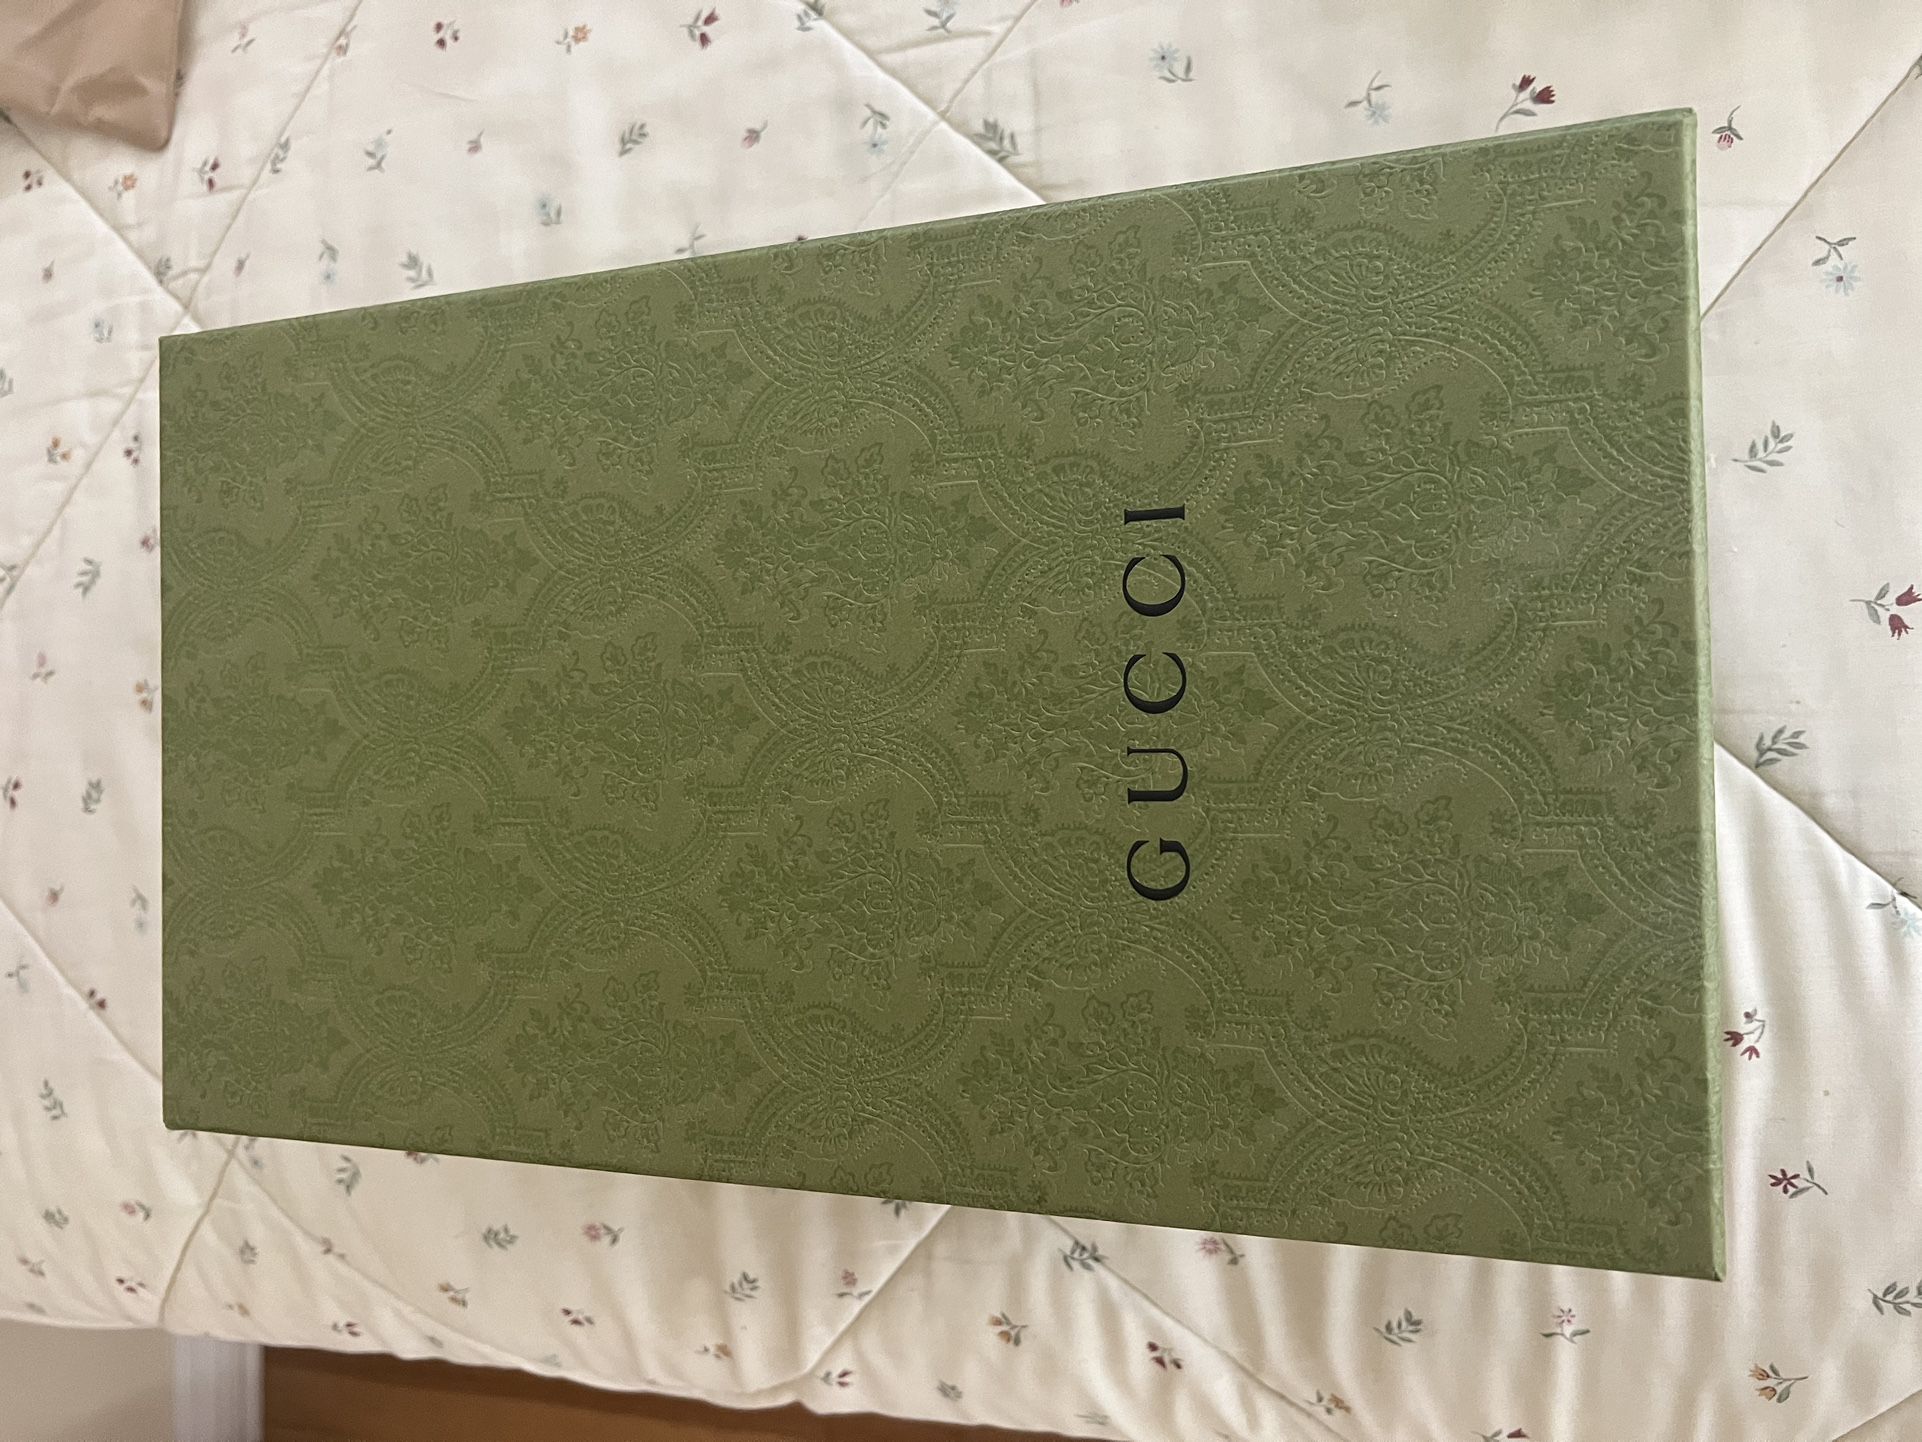 Gucci Shoe Box